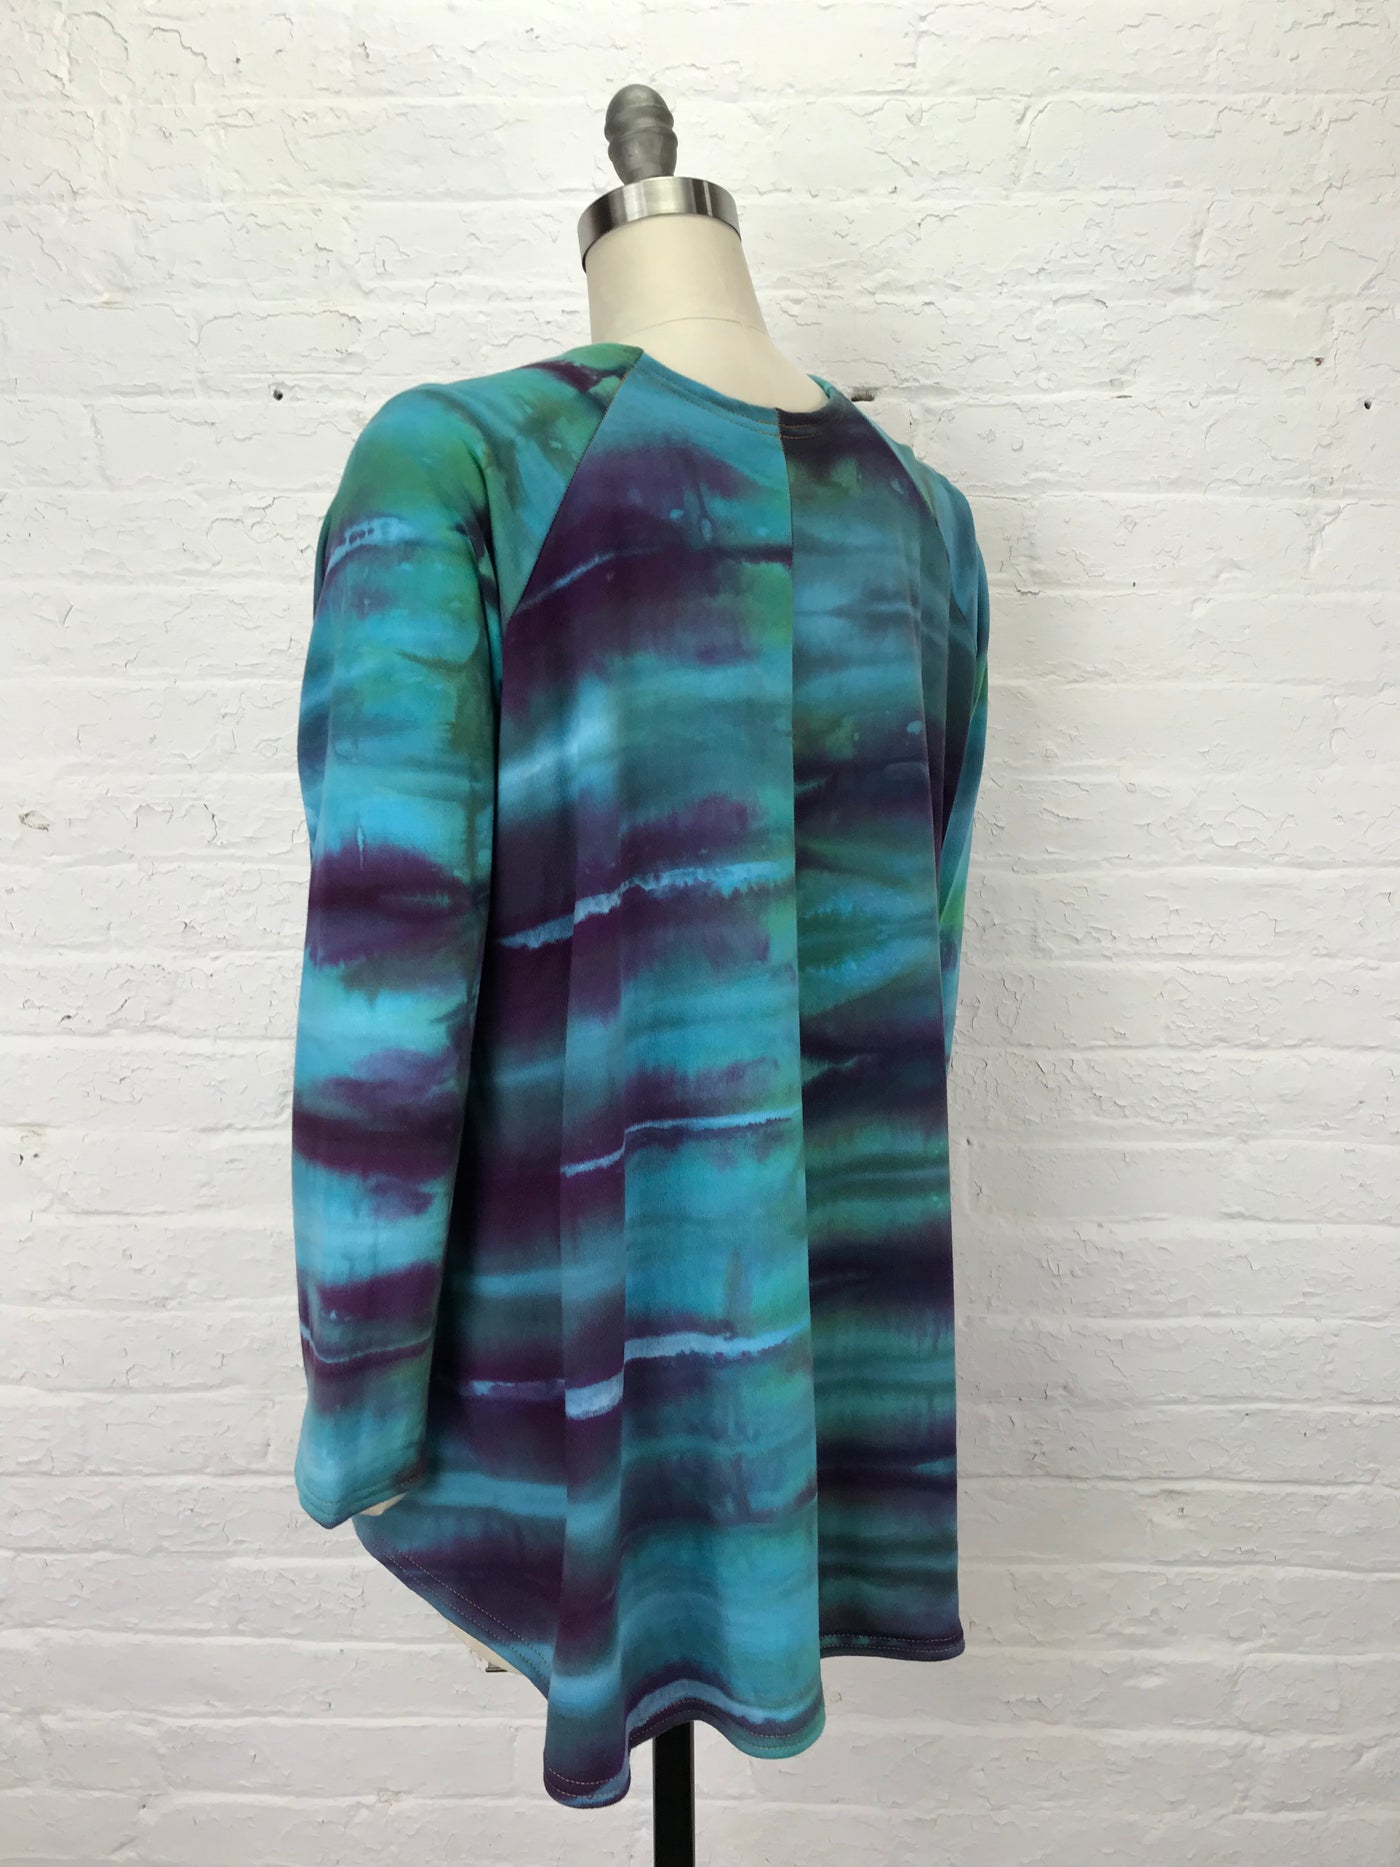 Fleece Long Sleeve Raglan Tunic in Purples and Greens - One Size